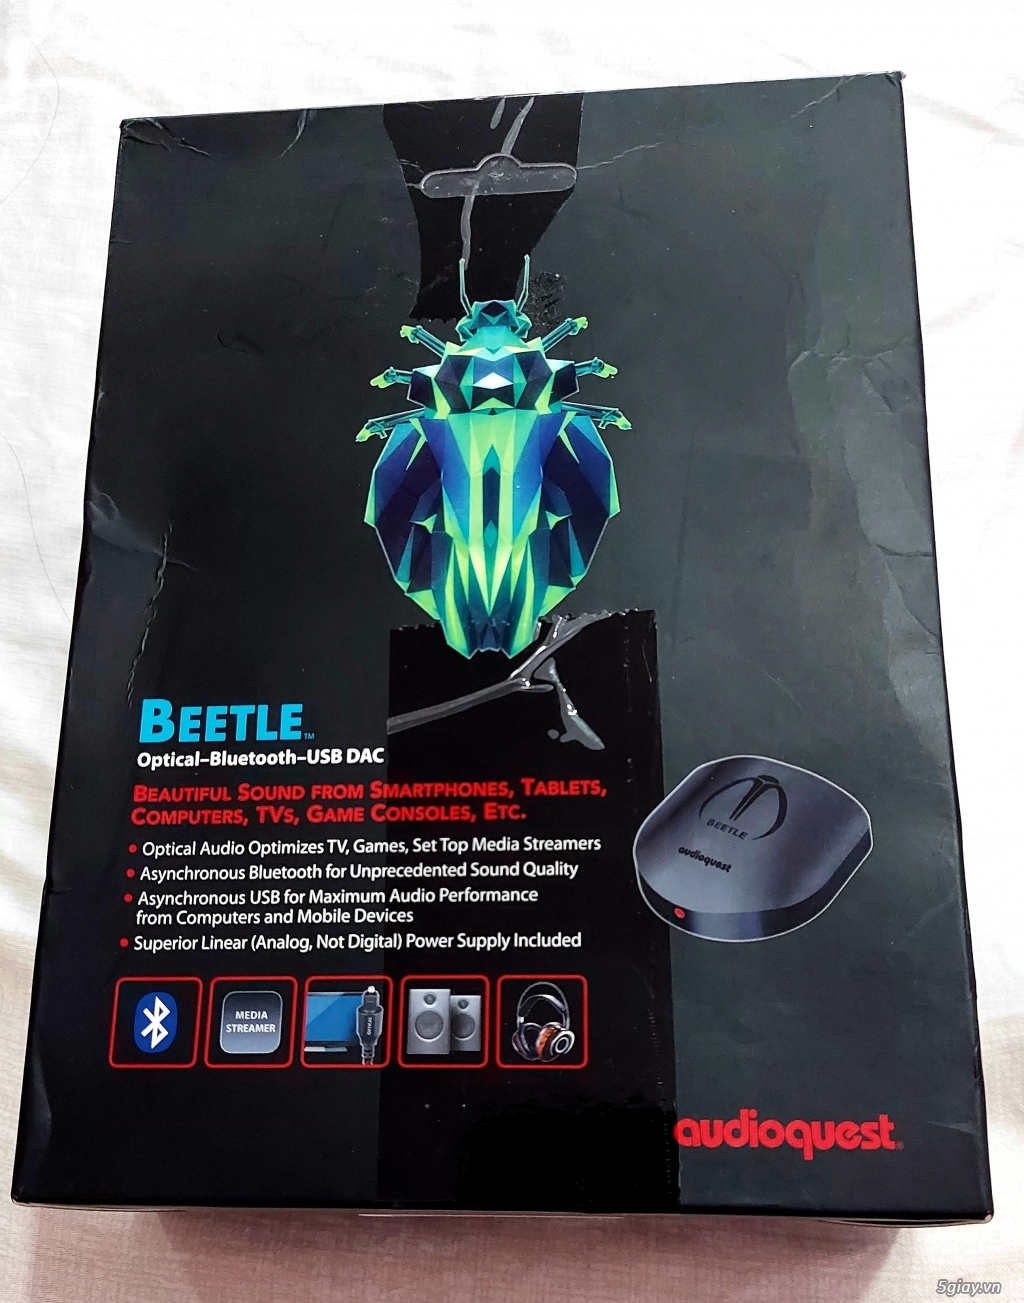 Dac giải mã Bluetooth AudioQuest Beetle - 2